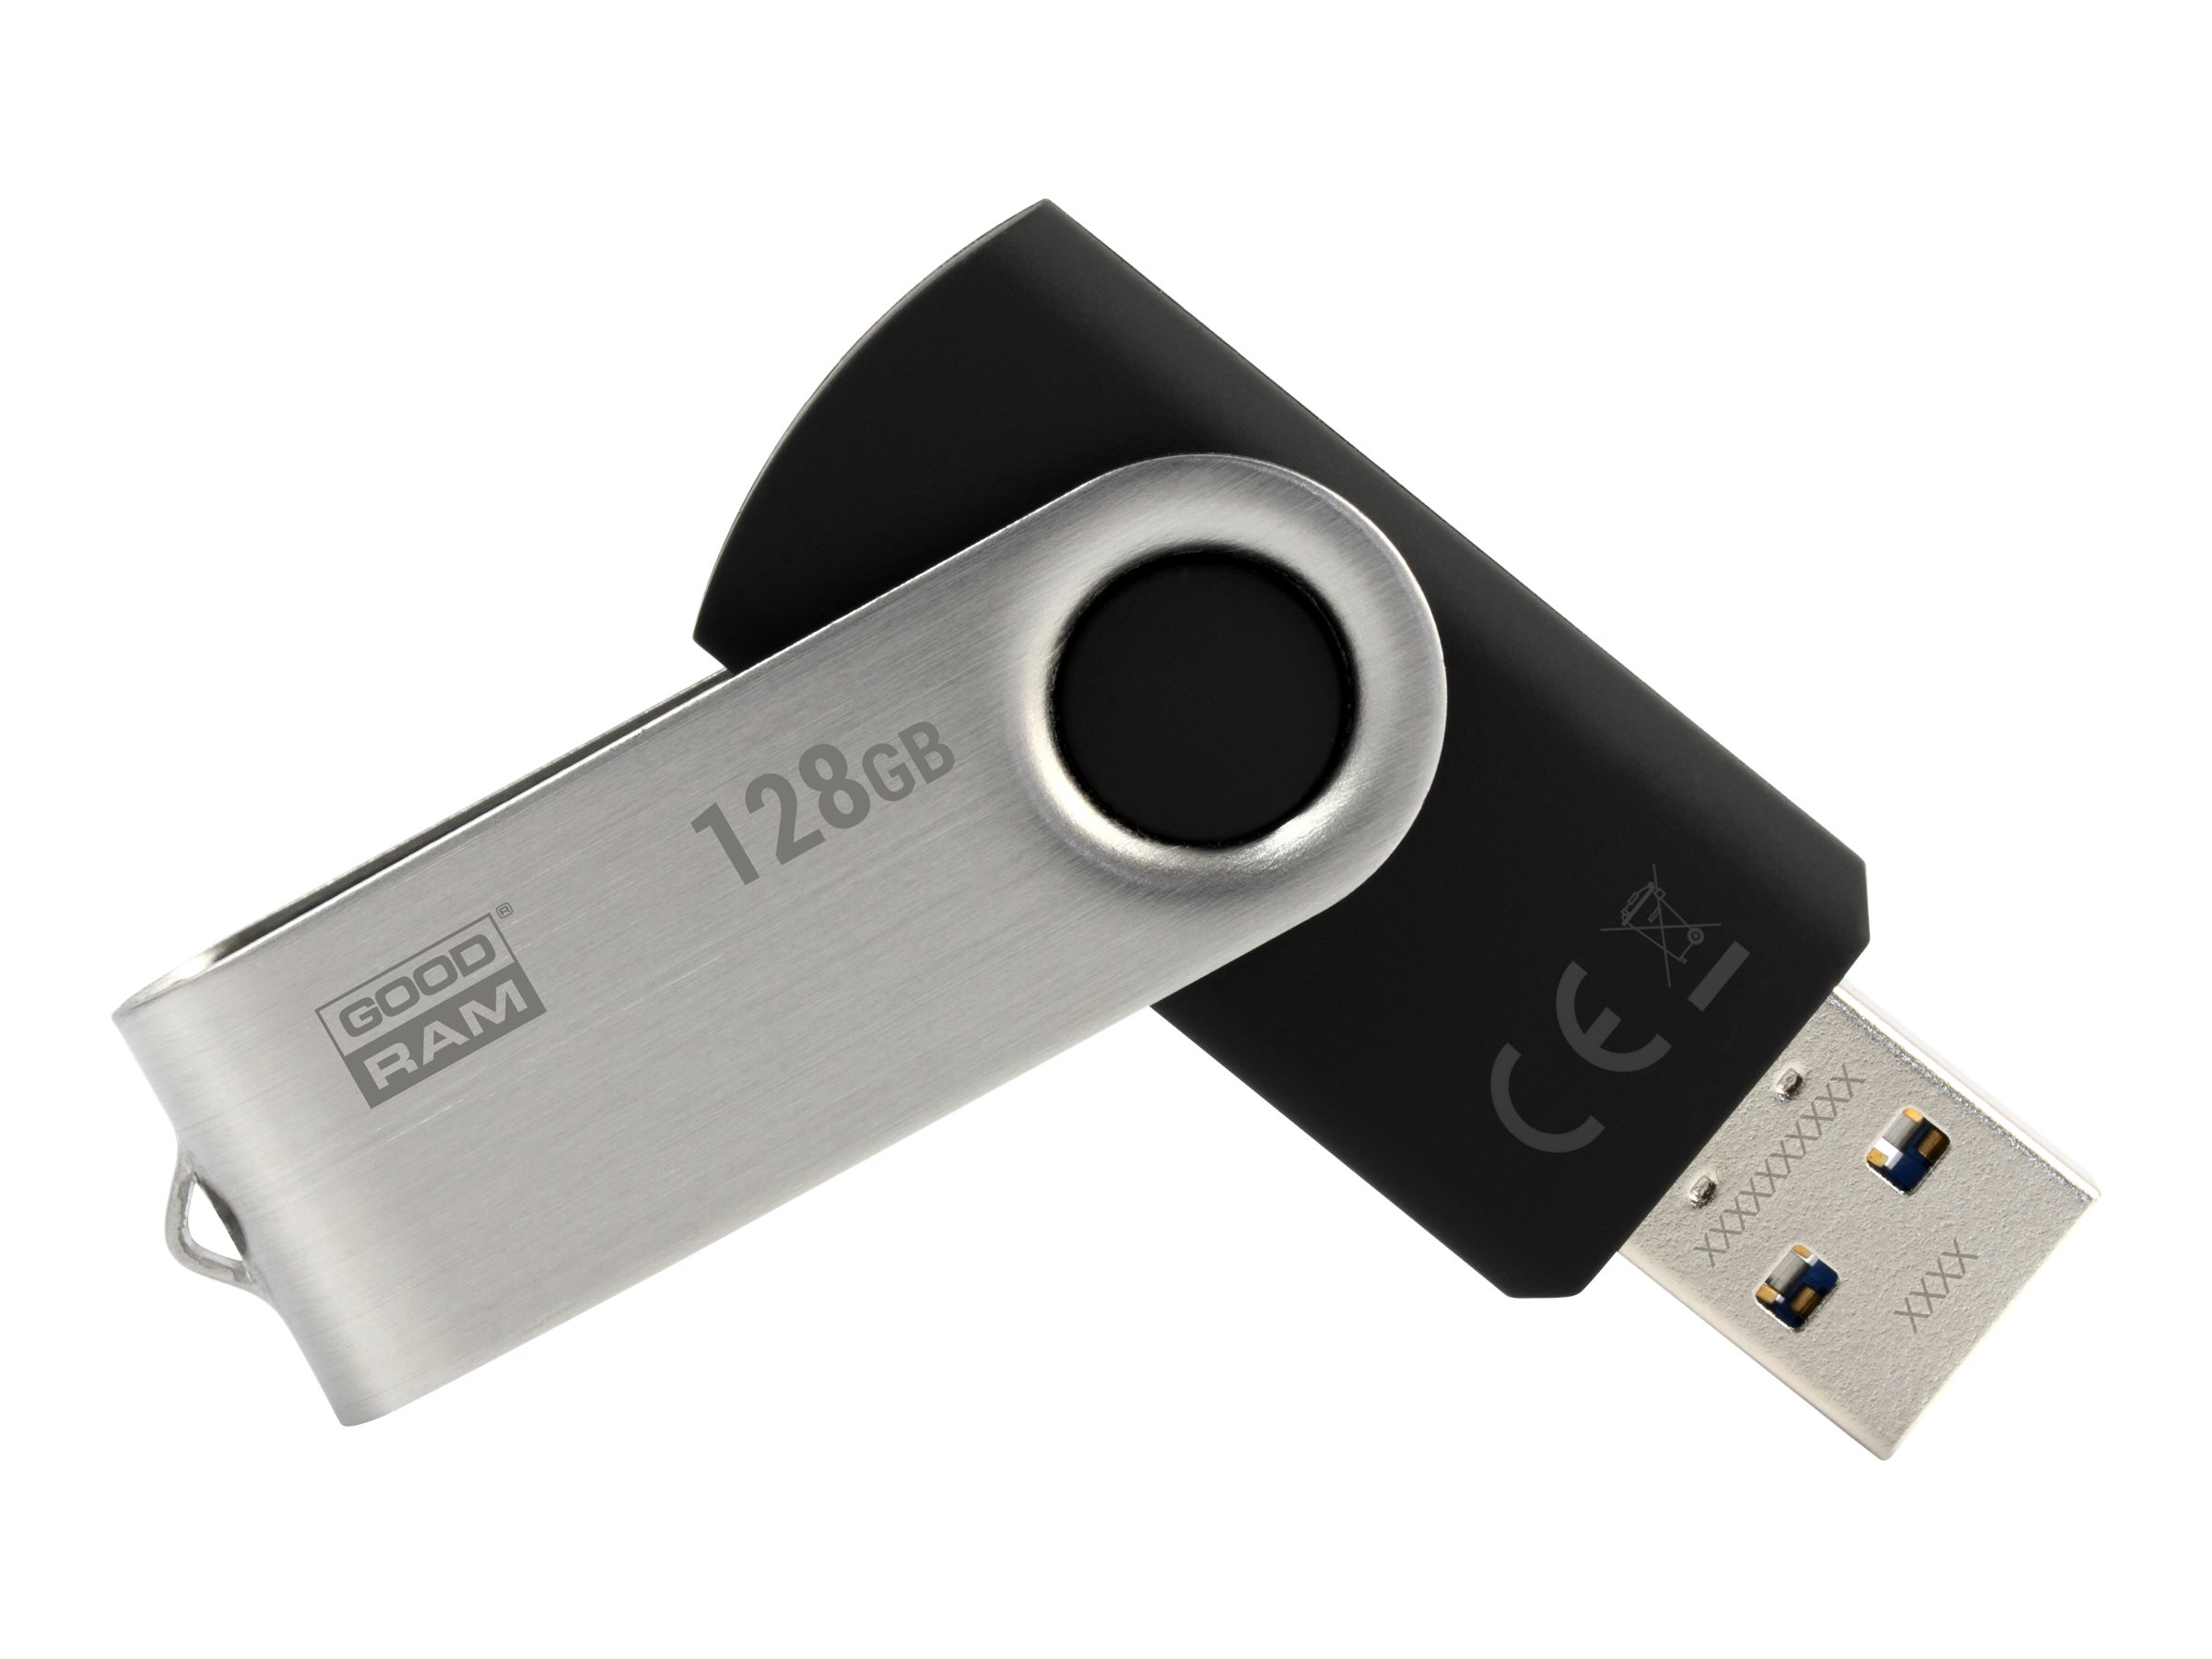 Goodram UTS3 - clé USB 128 Go - USB 3.1 Pas Cher